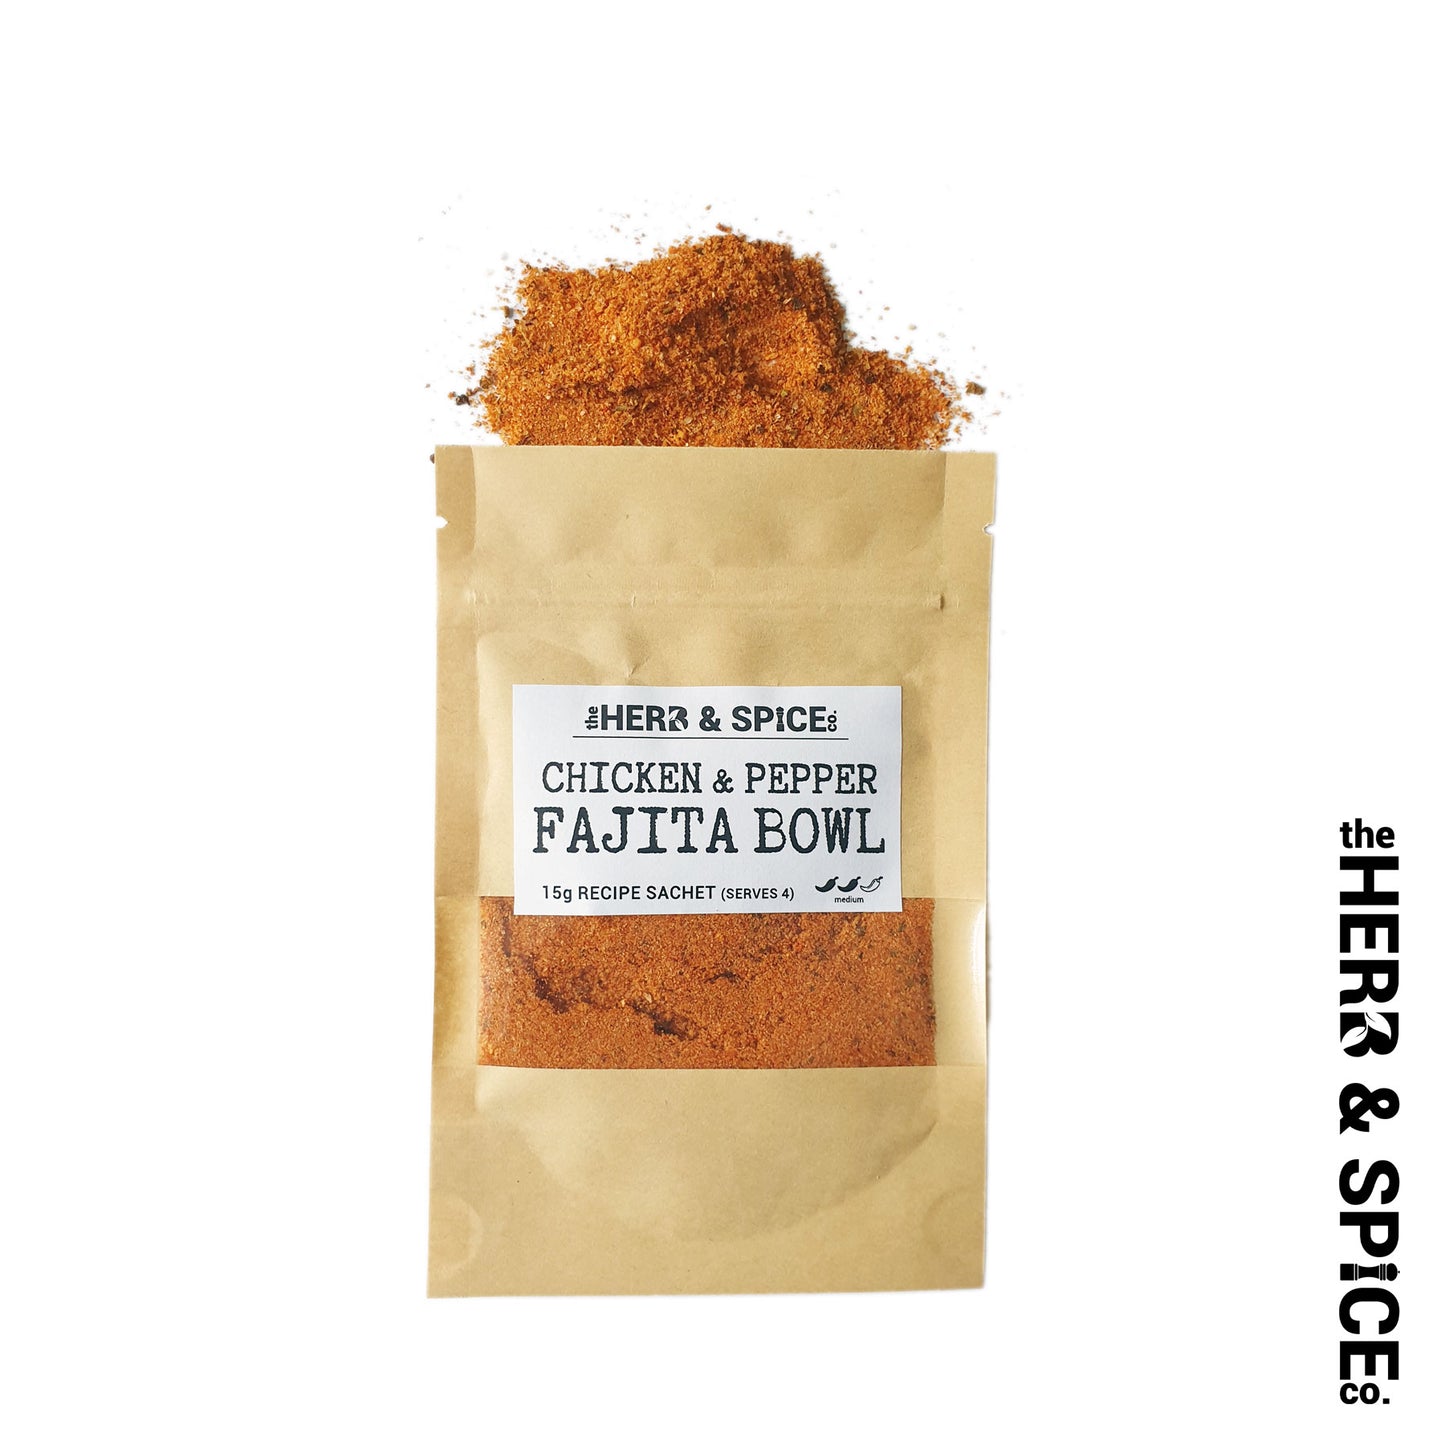 036 - Chicken & Pepper Fajita Bowl - Seasoning with Recipe